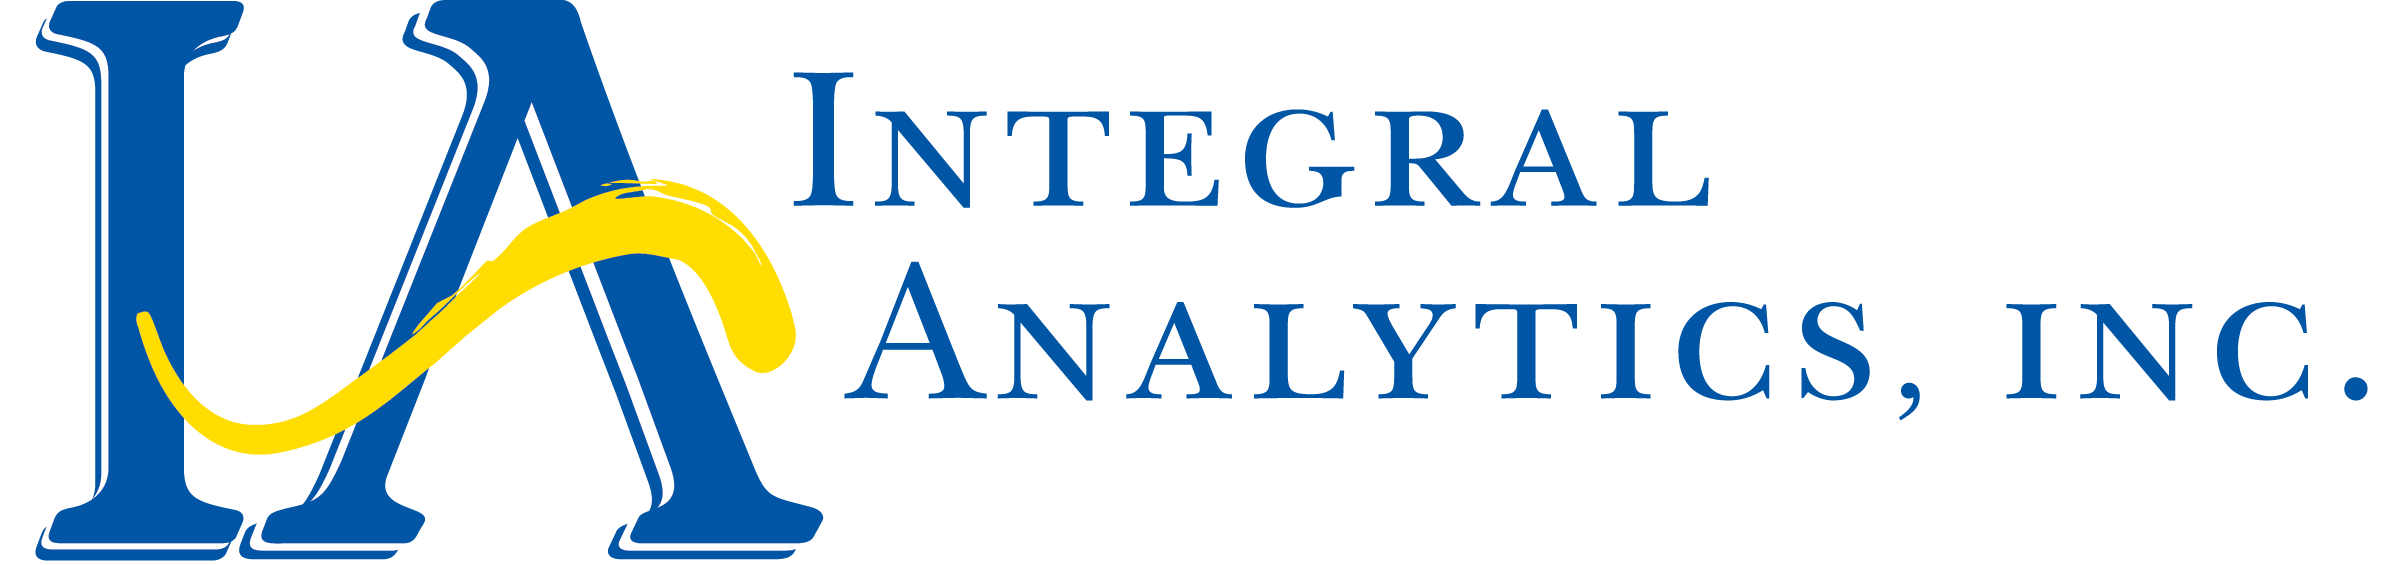 Integral Analytics logo